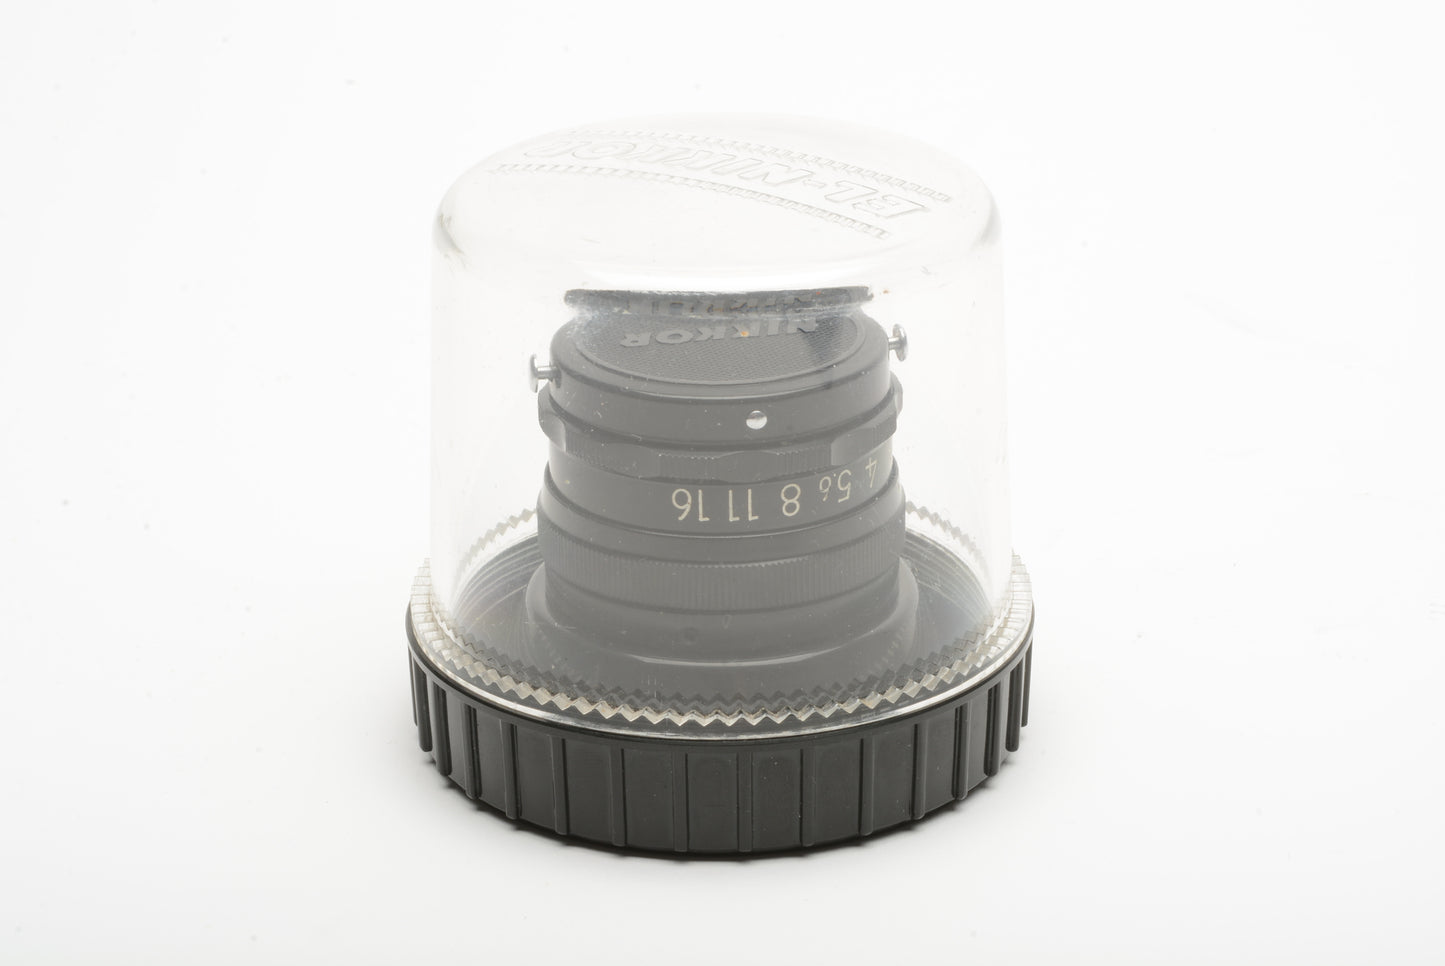 Nikon Nikkor-EL 50mm f2.8 Darkroom enlarging lens, jewel case + cap, nice